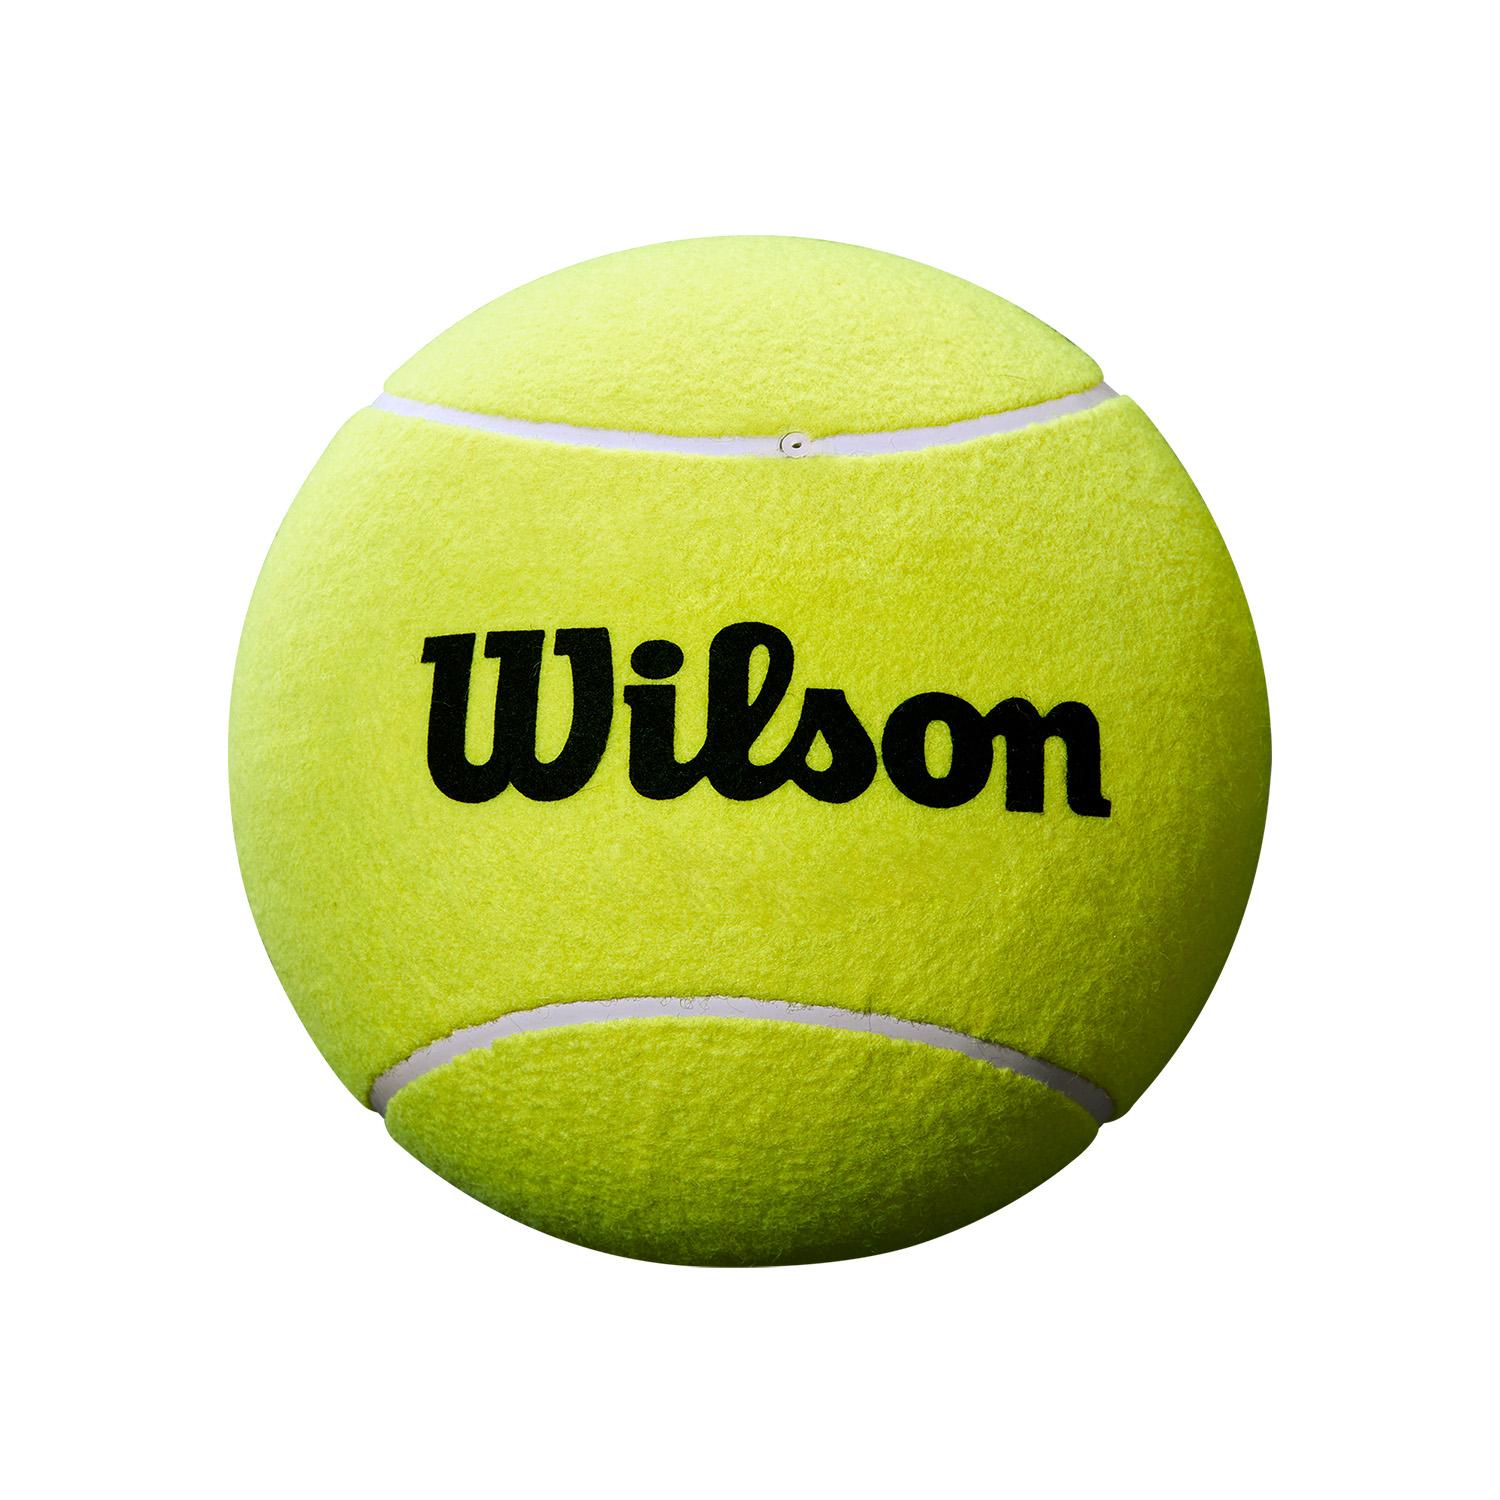 Roland-Garros Jumbo Ball